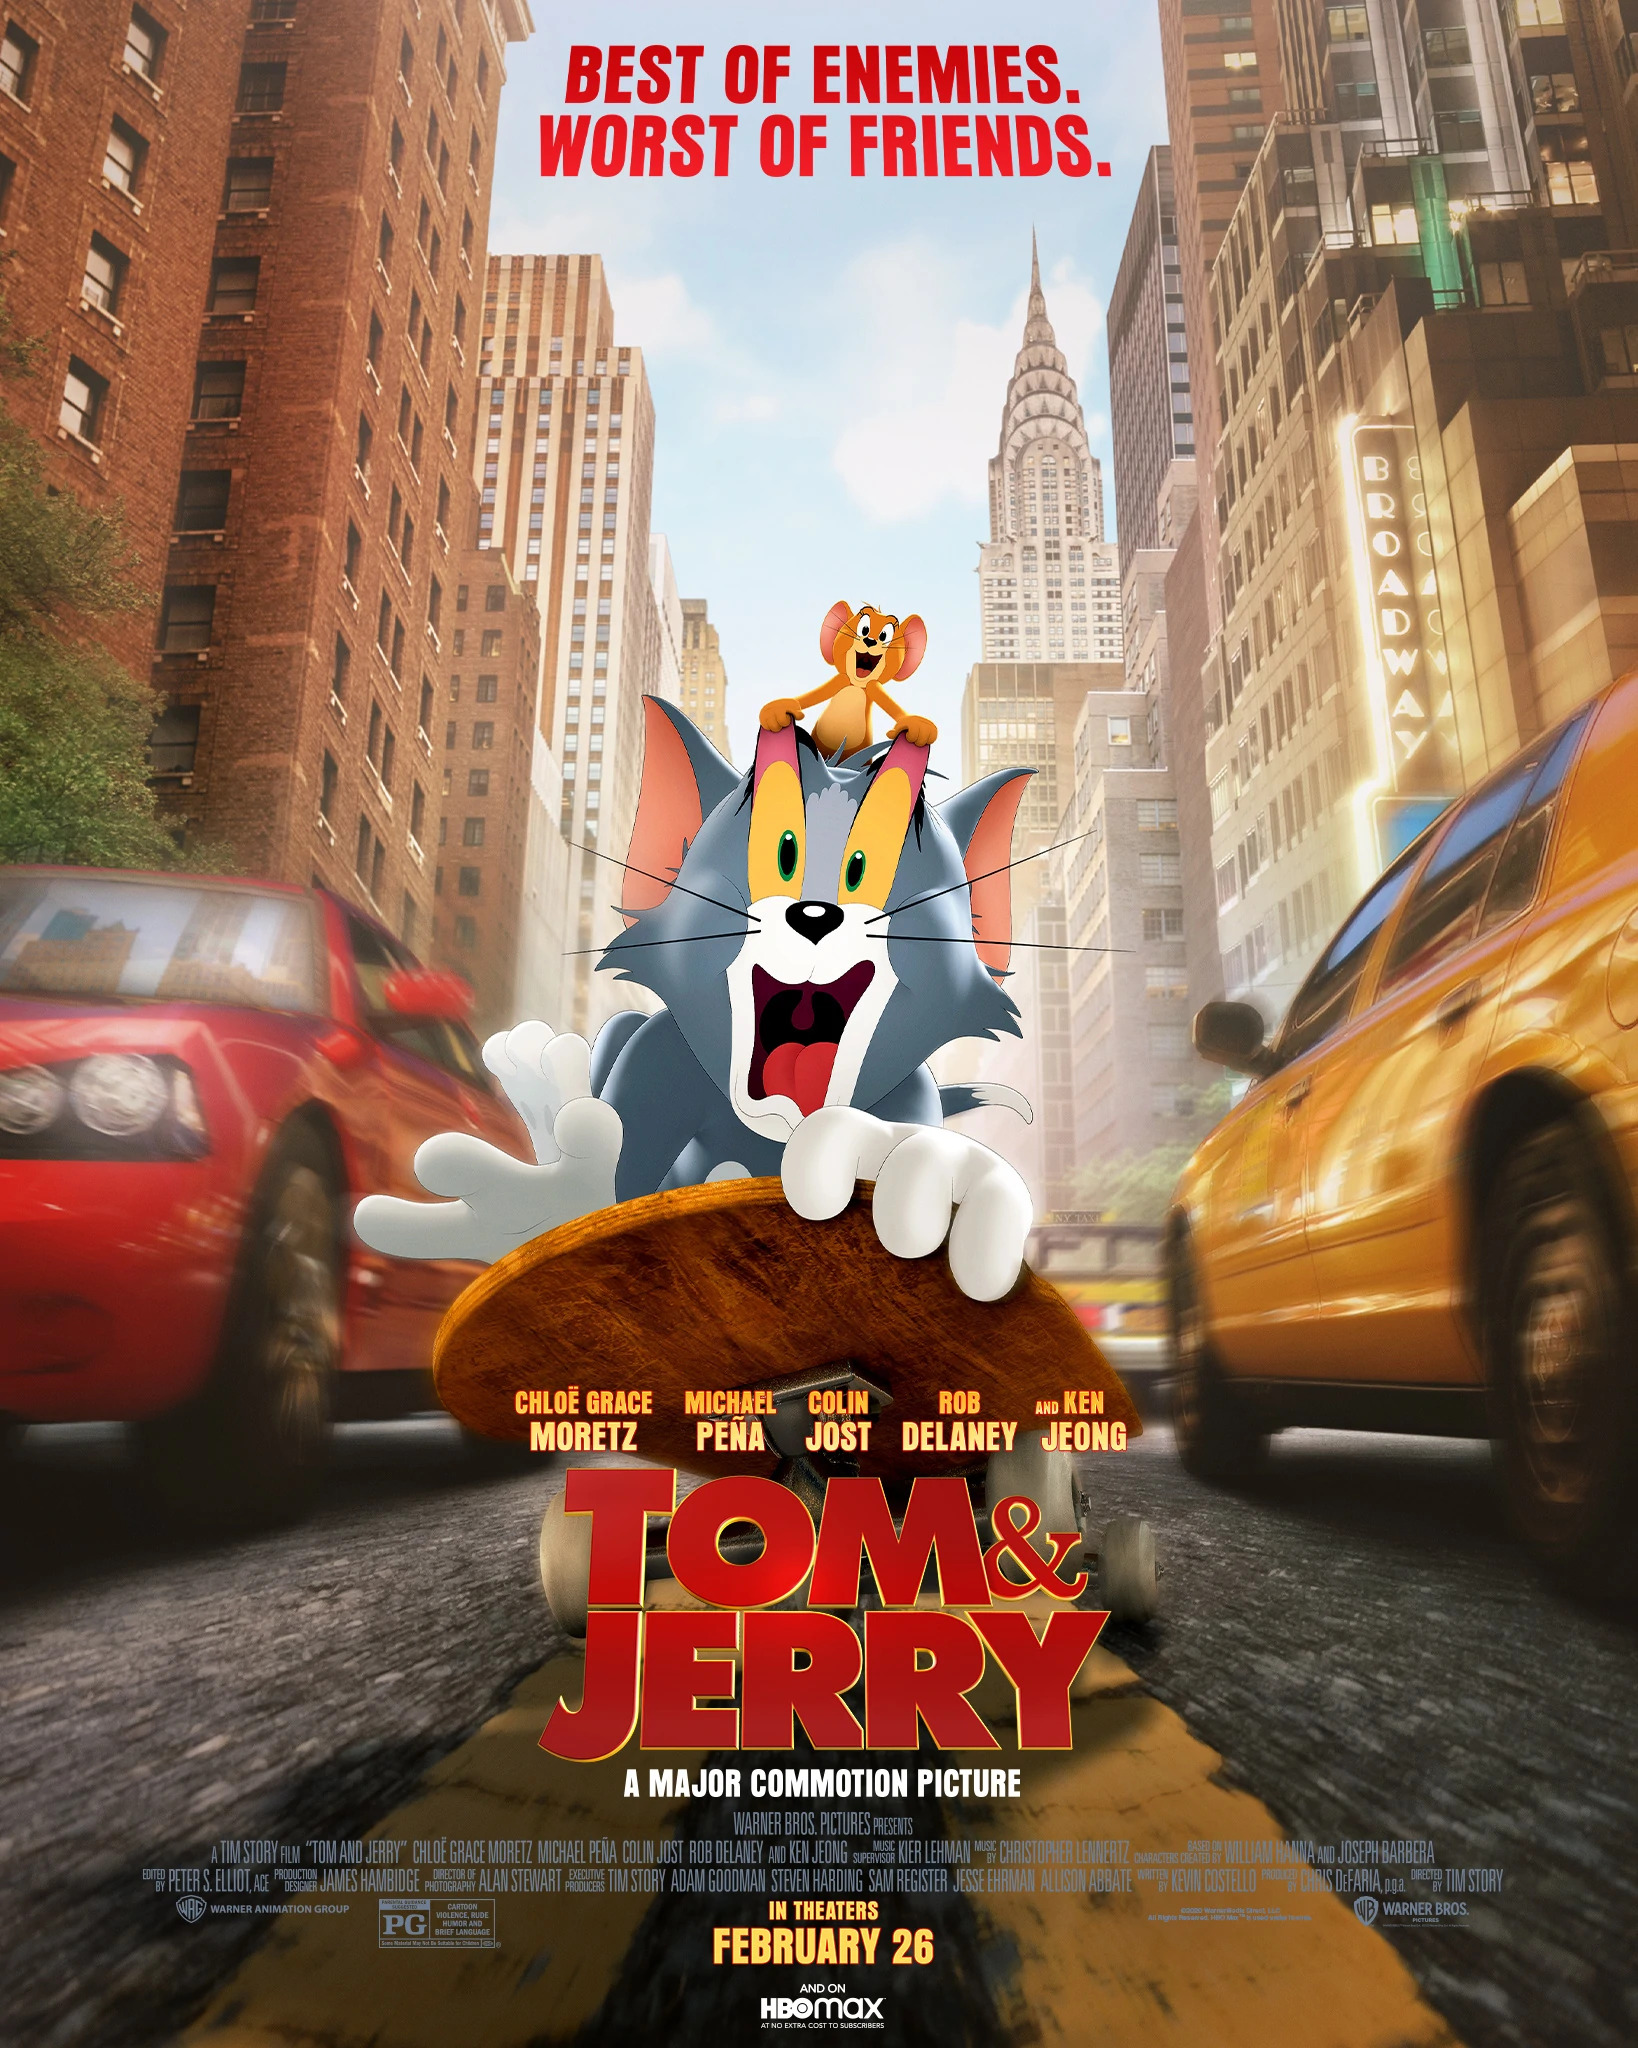 Tom & Jerry (2021 film) | Warner Bros. Entertainment Wiki | Fandom